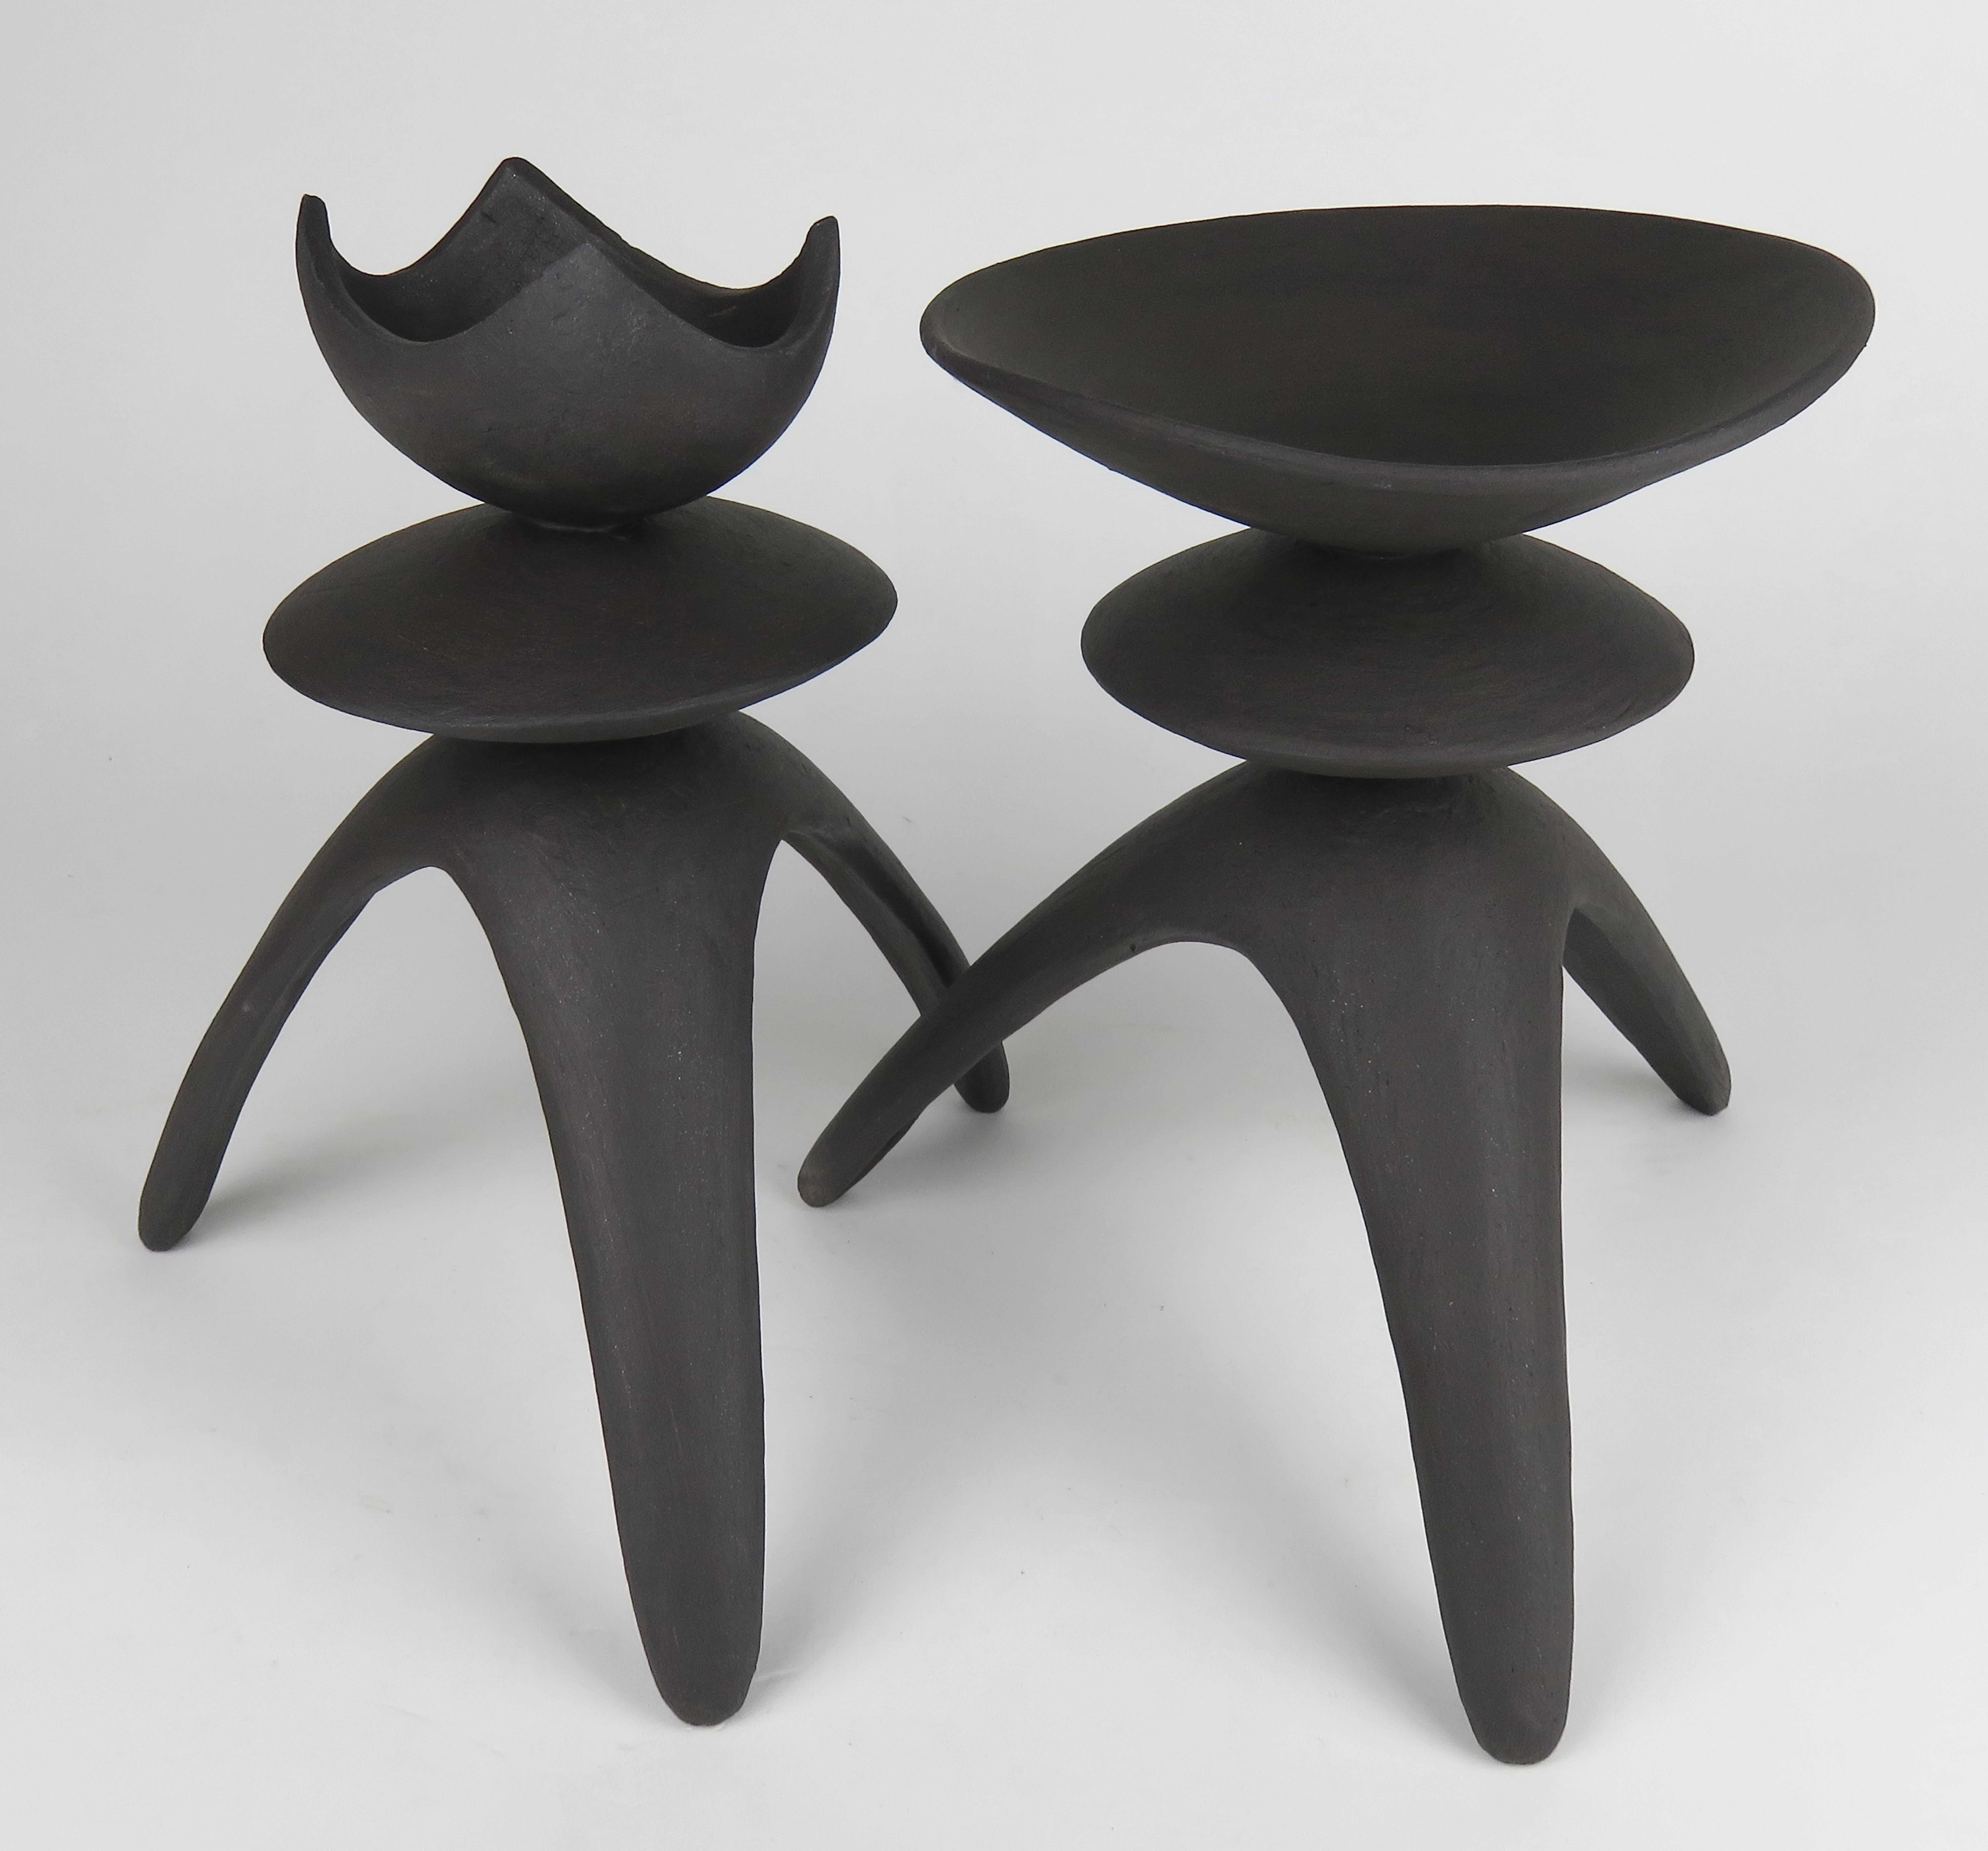 Hand-Crafted Pair of Tall Modern TOTEMS, Dark Matte Brown/Black Hand Built Ceramic Stoneware